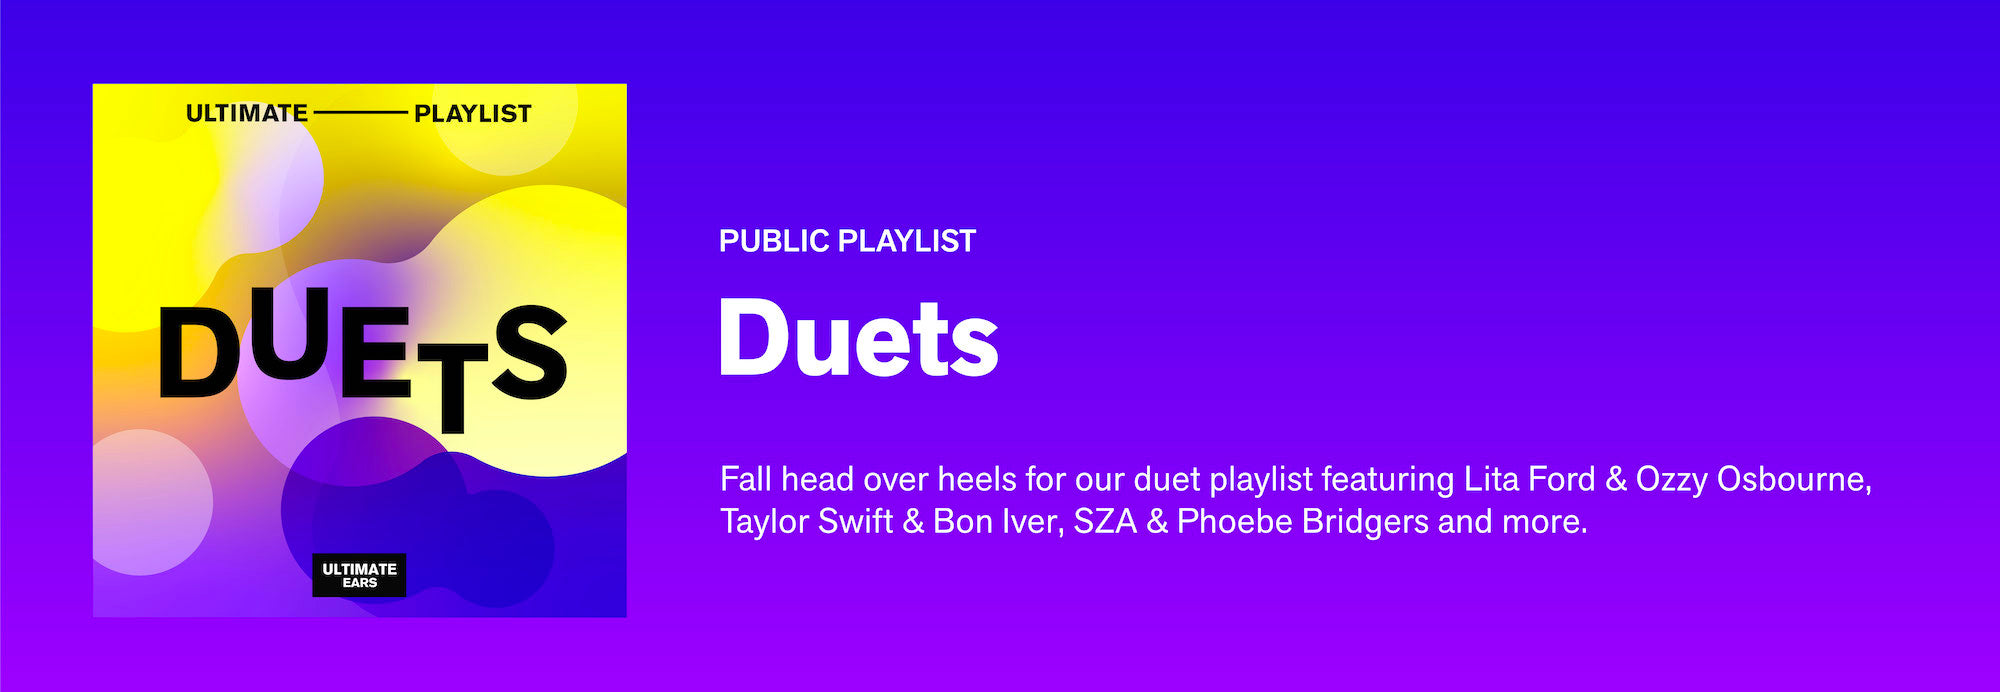 Playlist: Duets